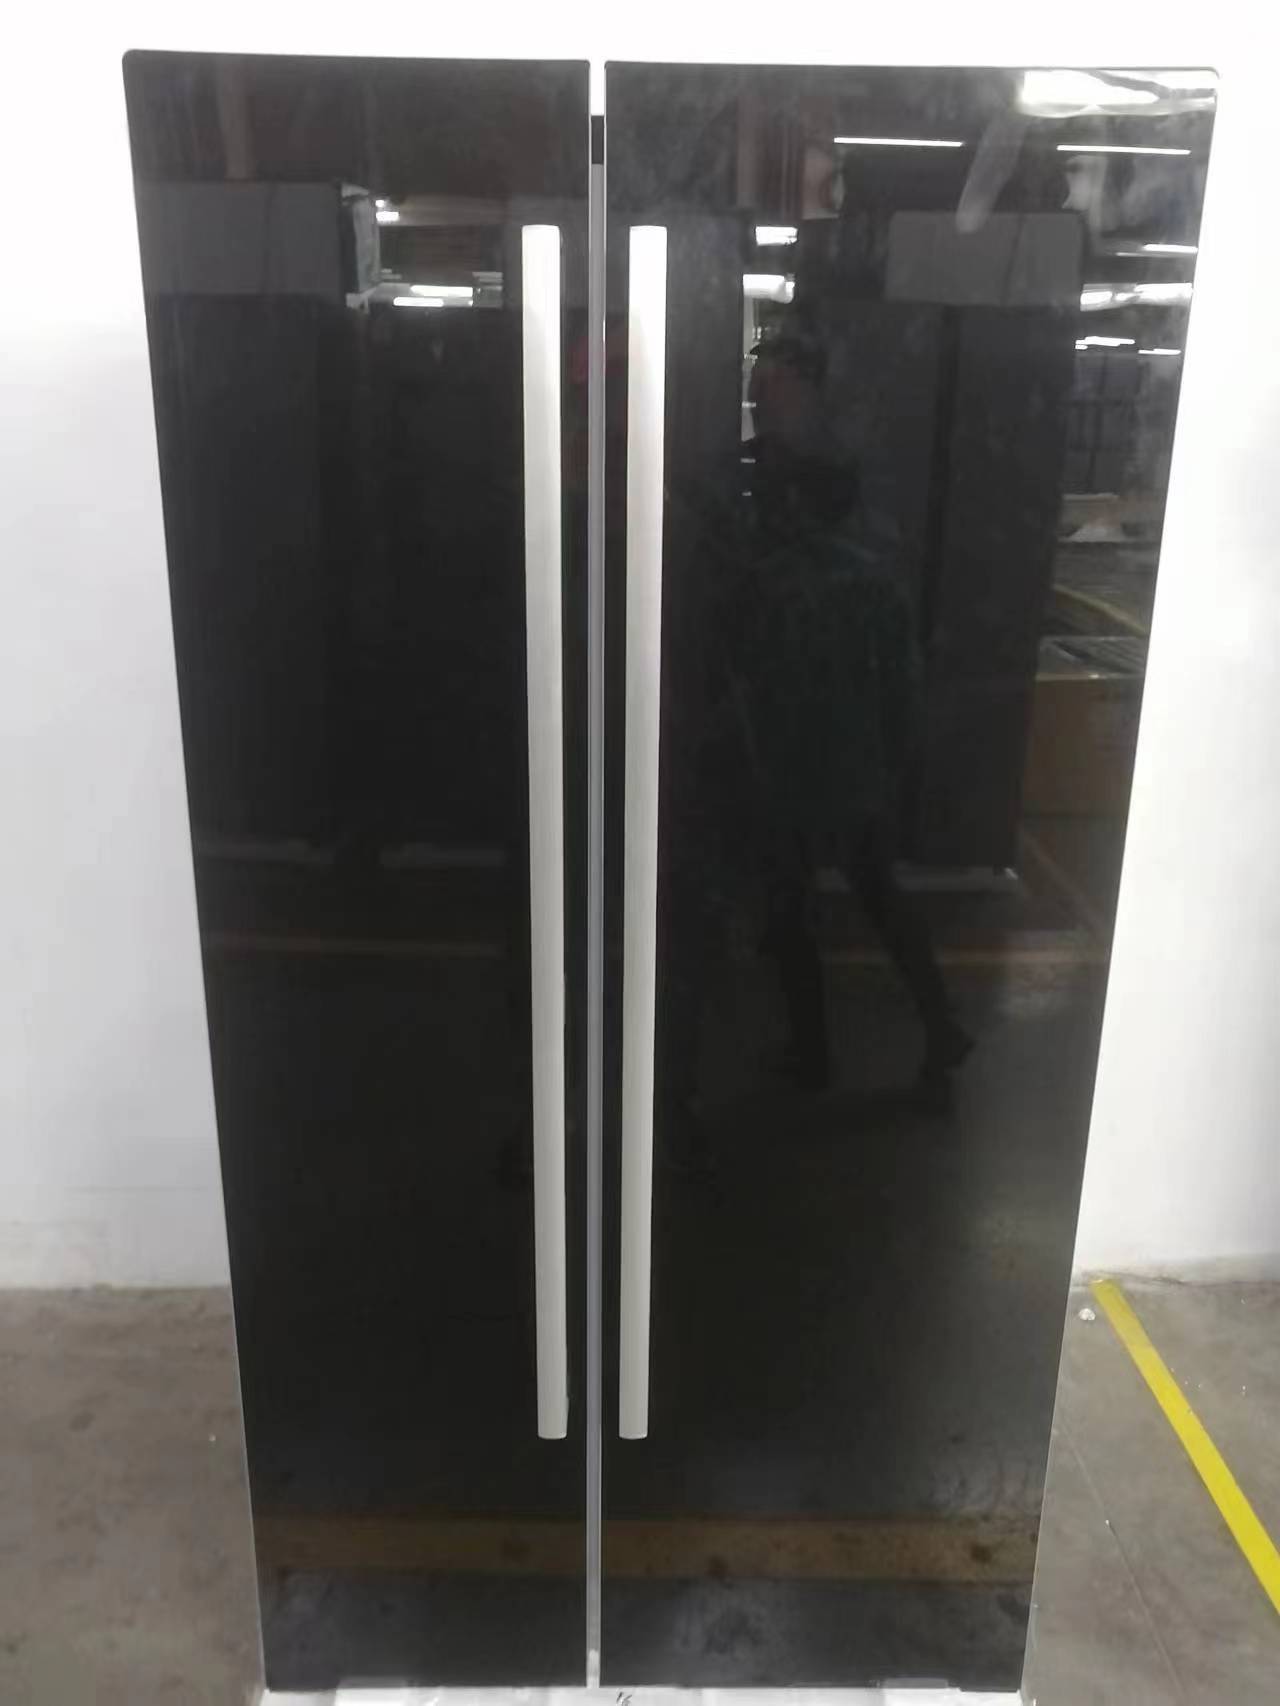 Side by Side refrigerator model number BCD-646W